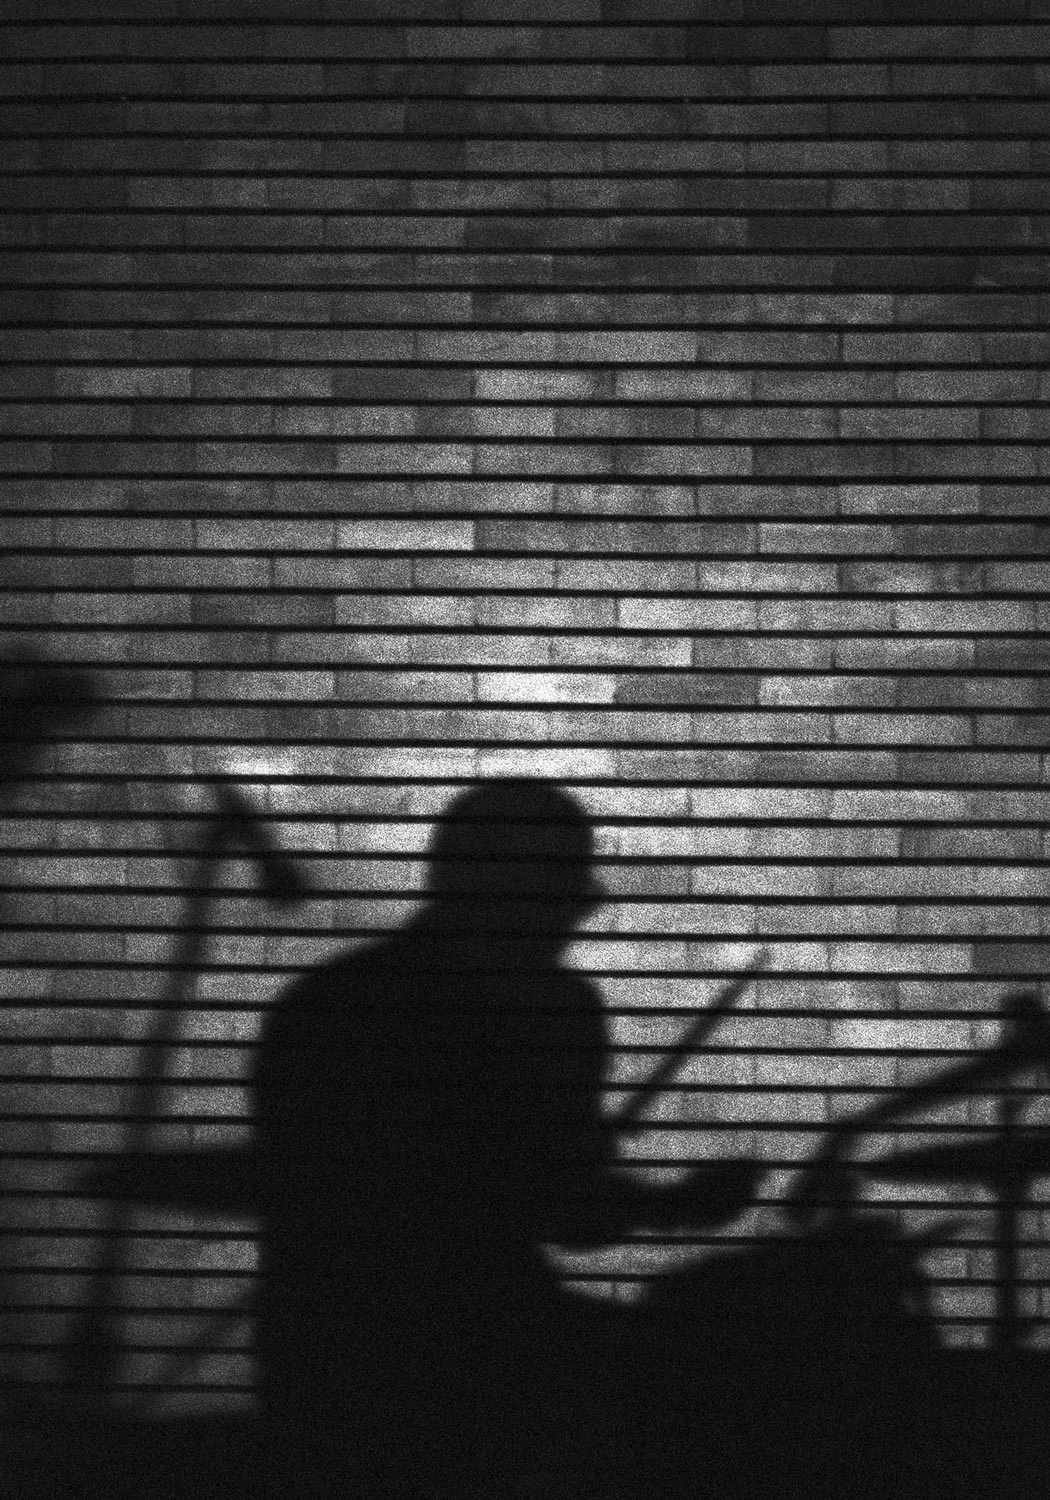 Drummer shadow on a brick wall